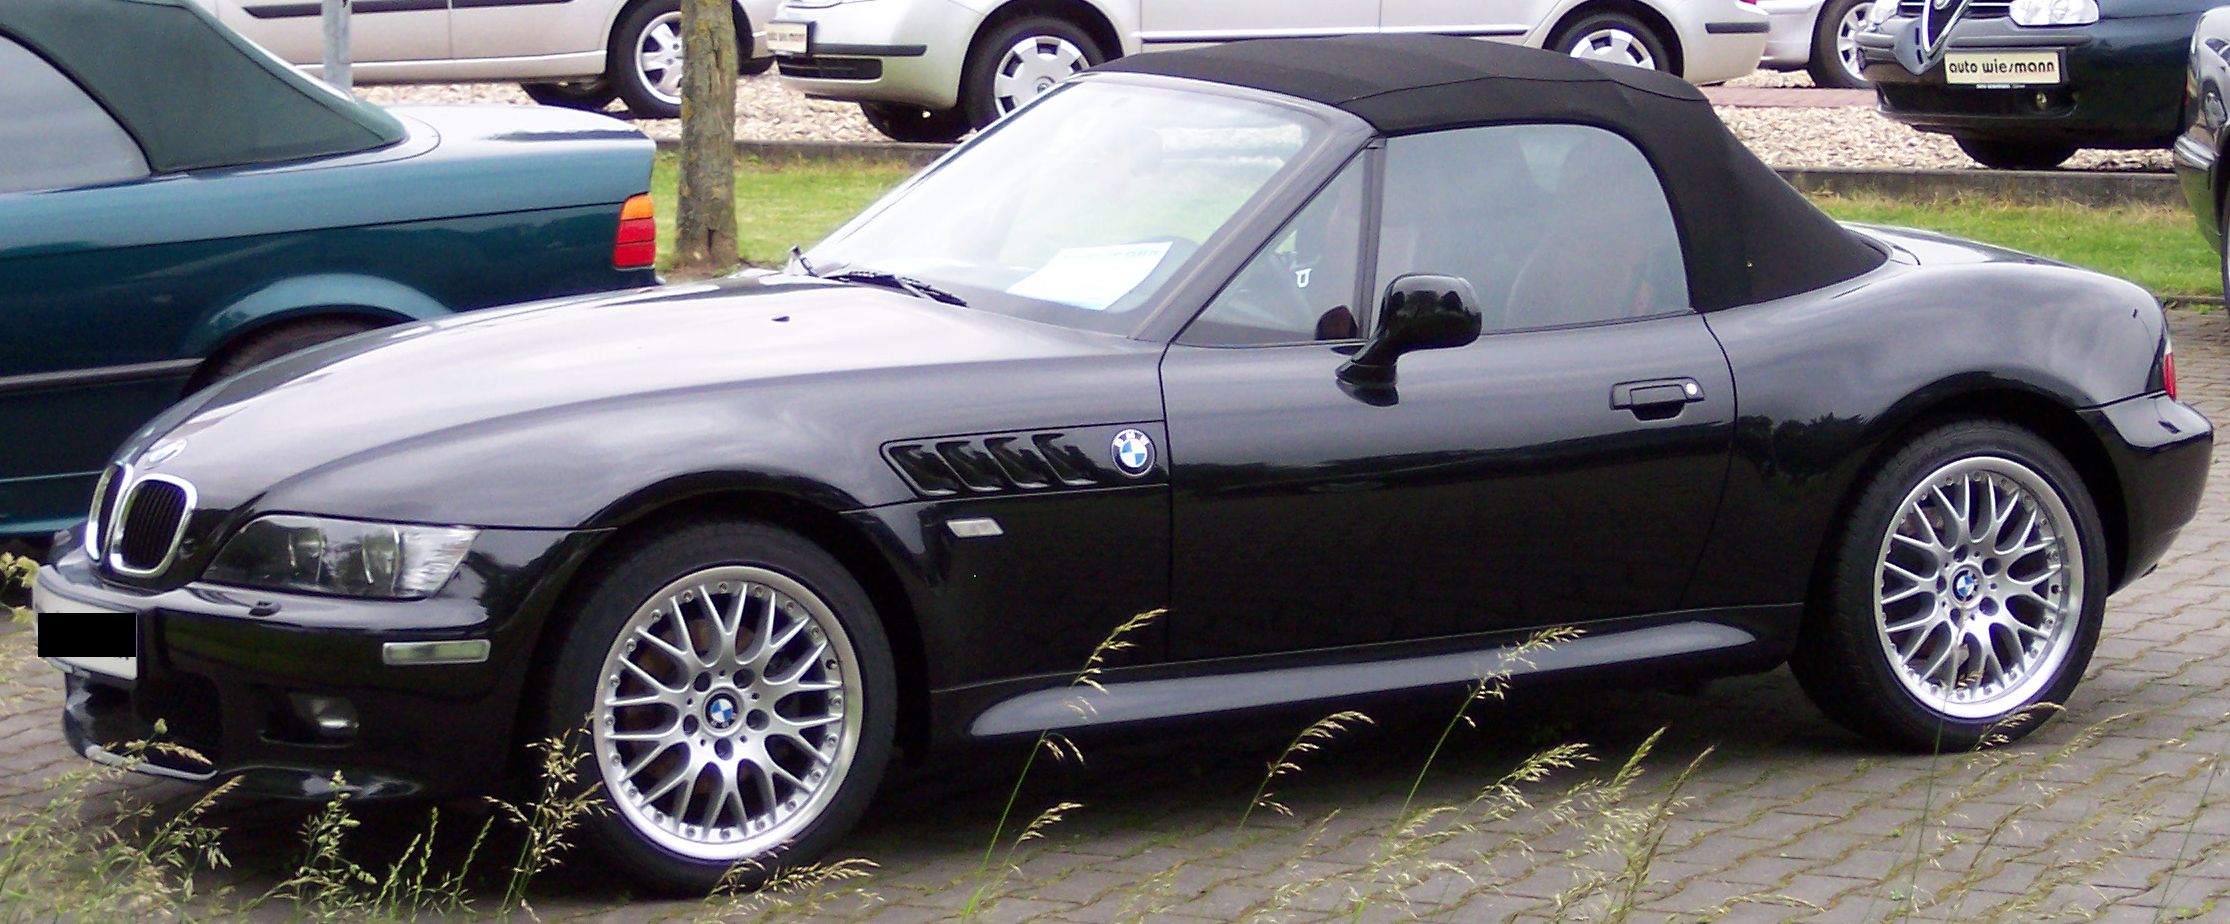 Dossier: BMW Z3 noir vl.jpg